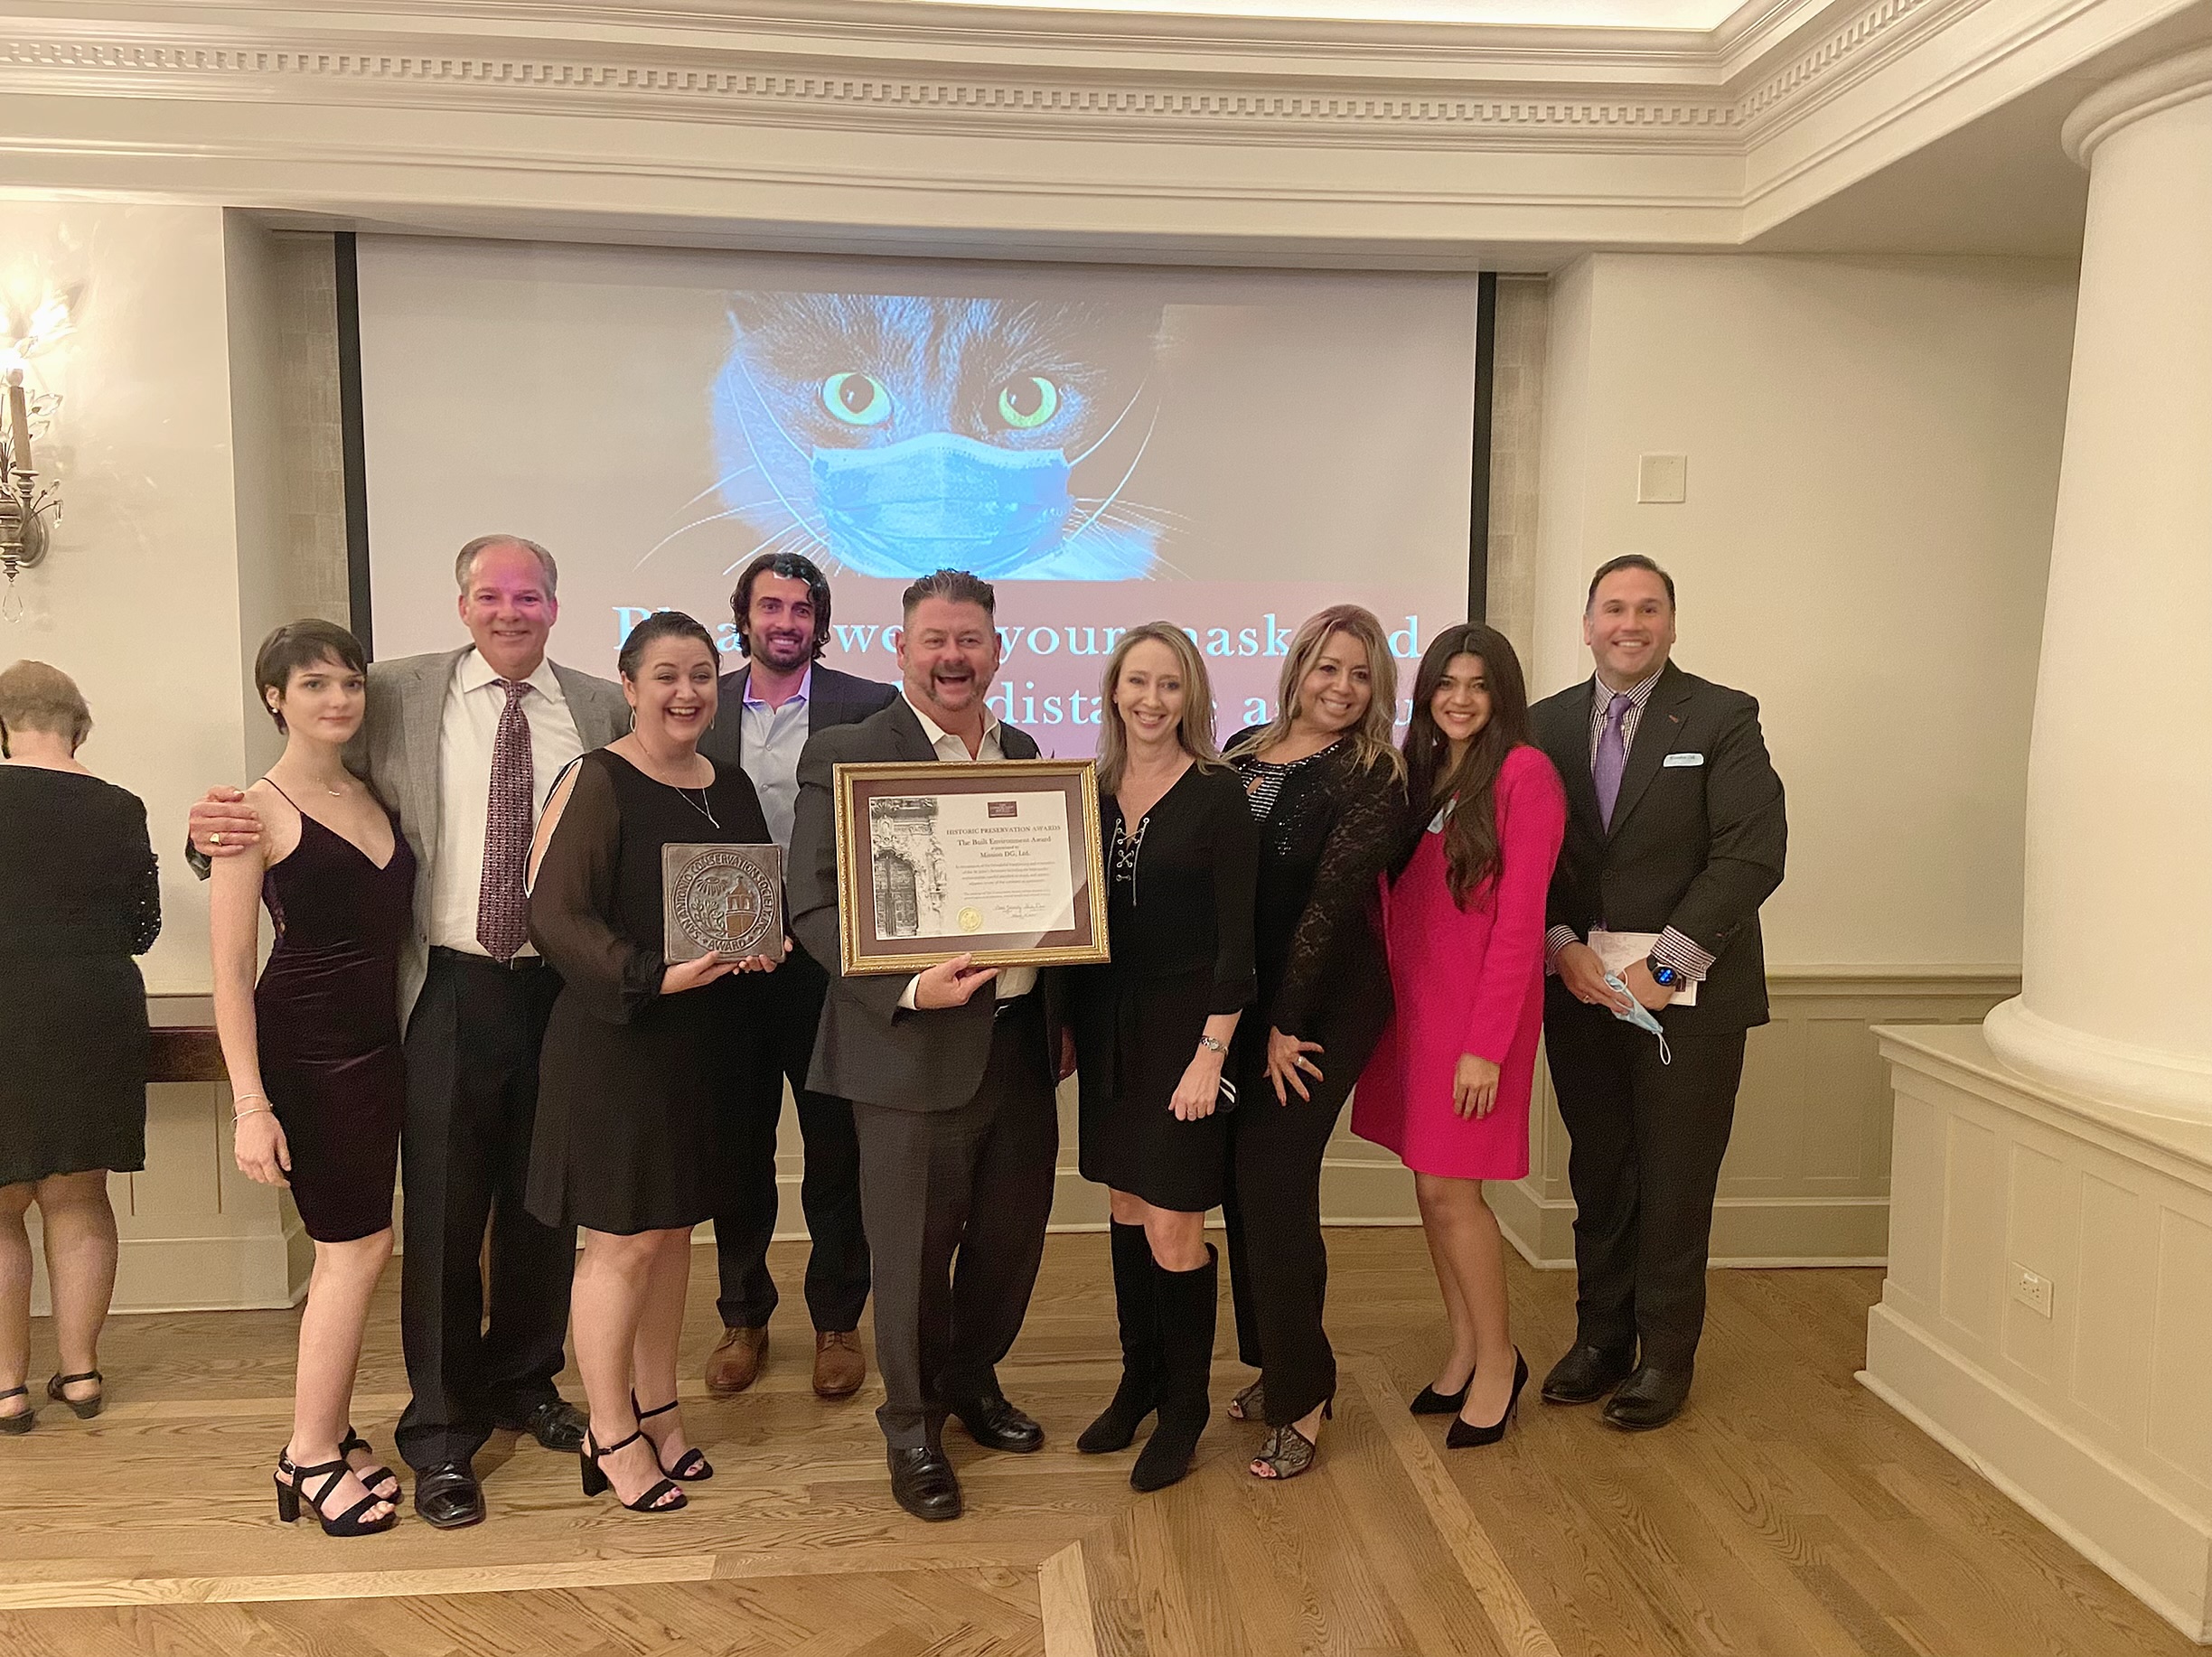 Mission DG Wins the San Antonio Conservation Award 2